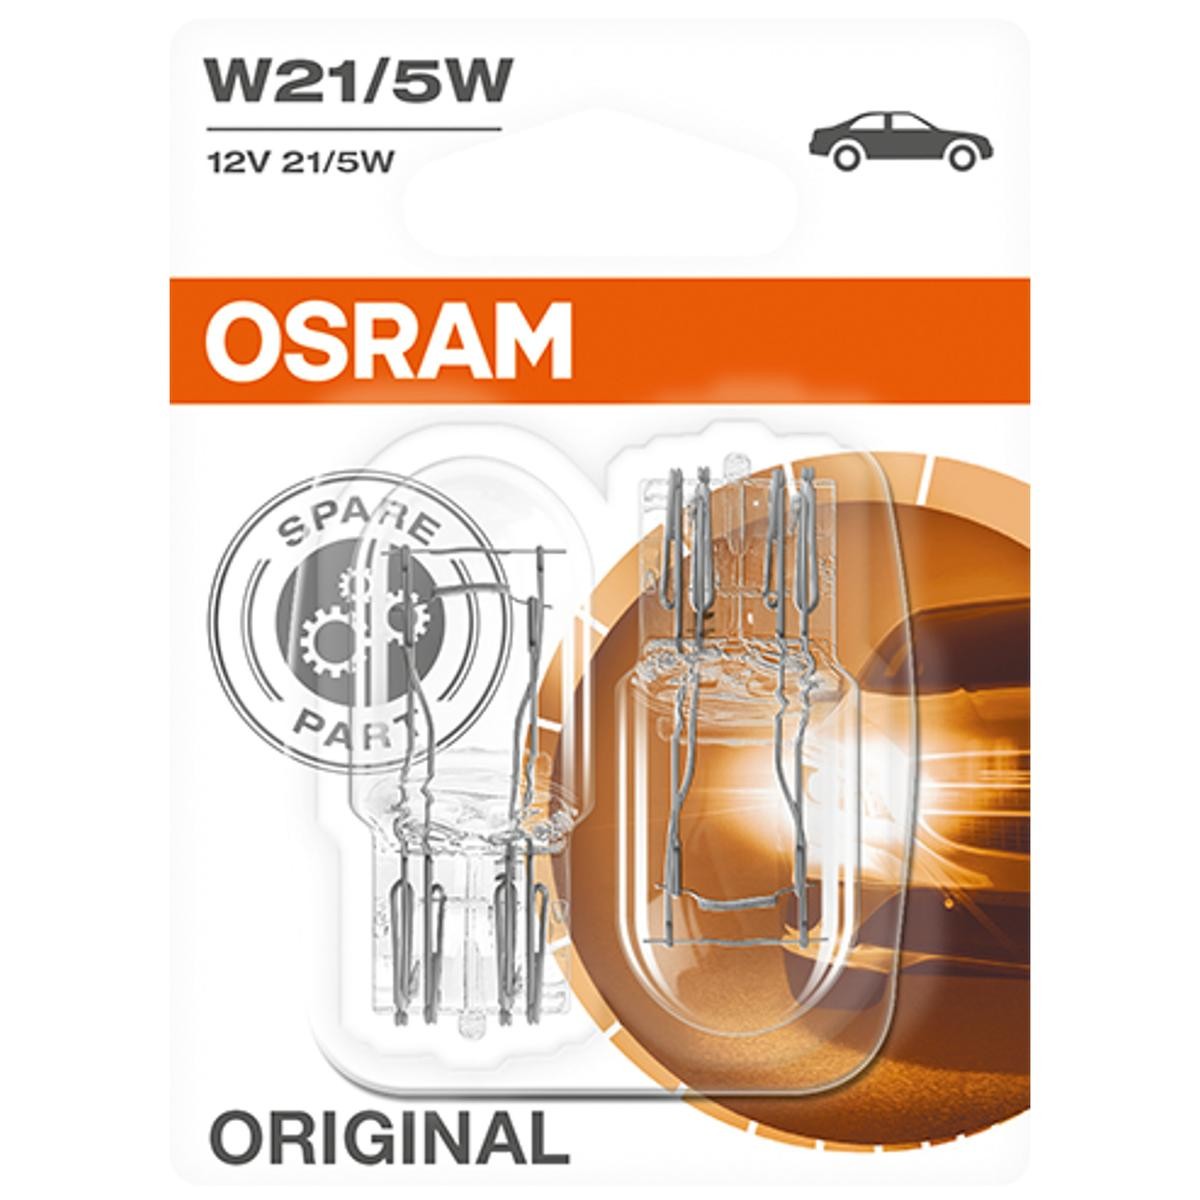 OSRAM 7515-02B Birne, Blinker W21/5W, 12V 21/5W, ORIGINAL Volkswagen in Original Qualität